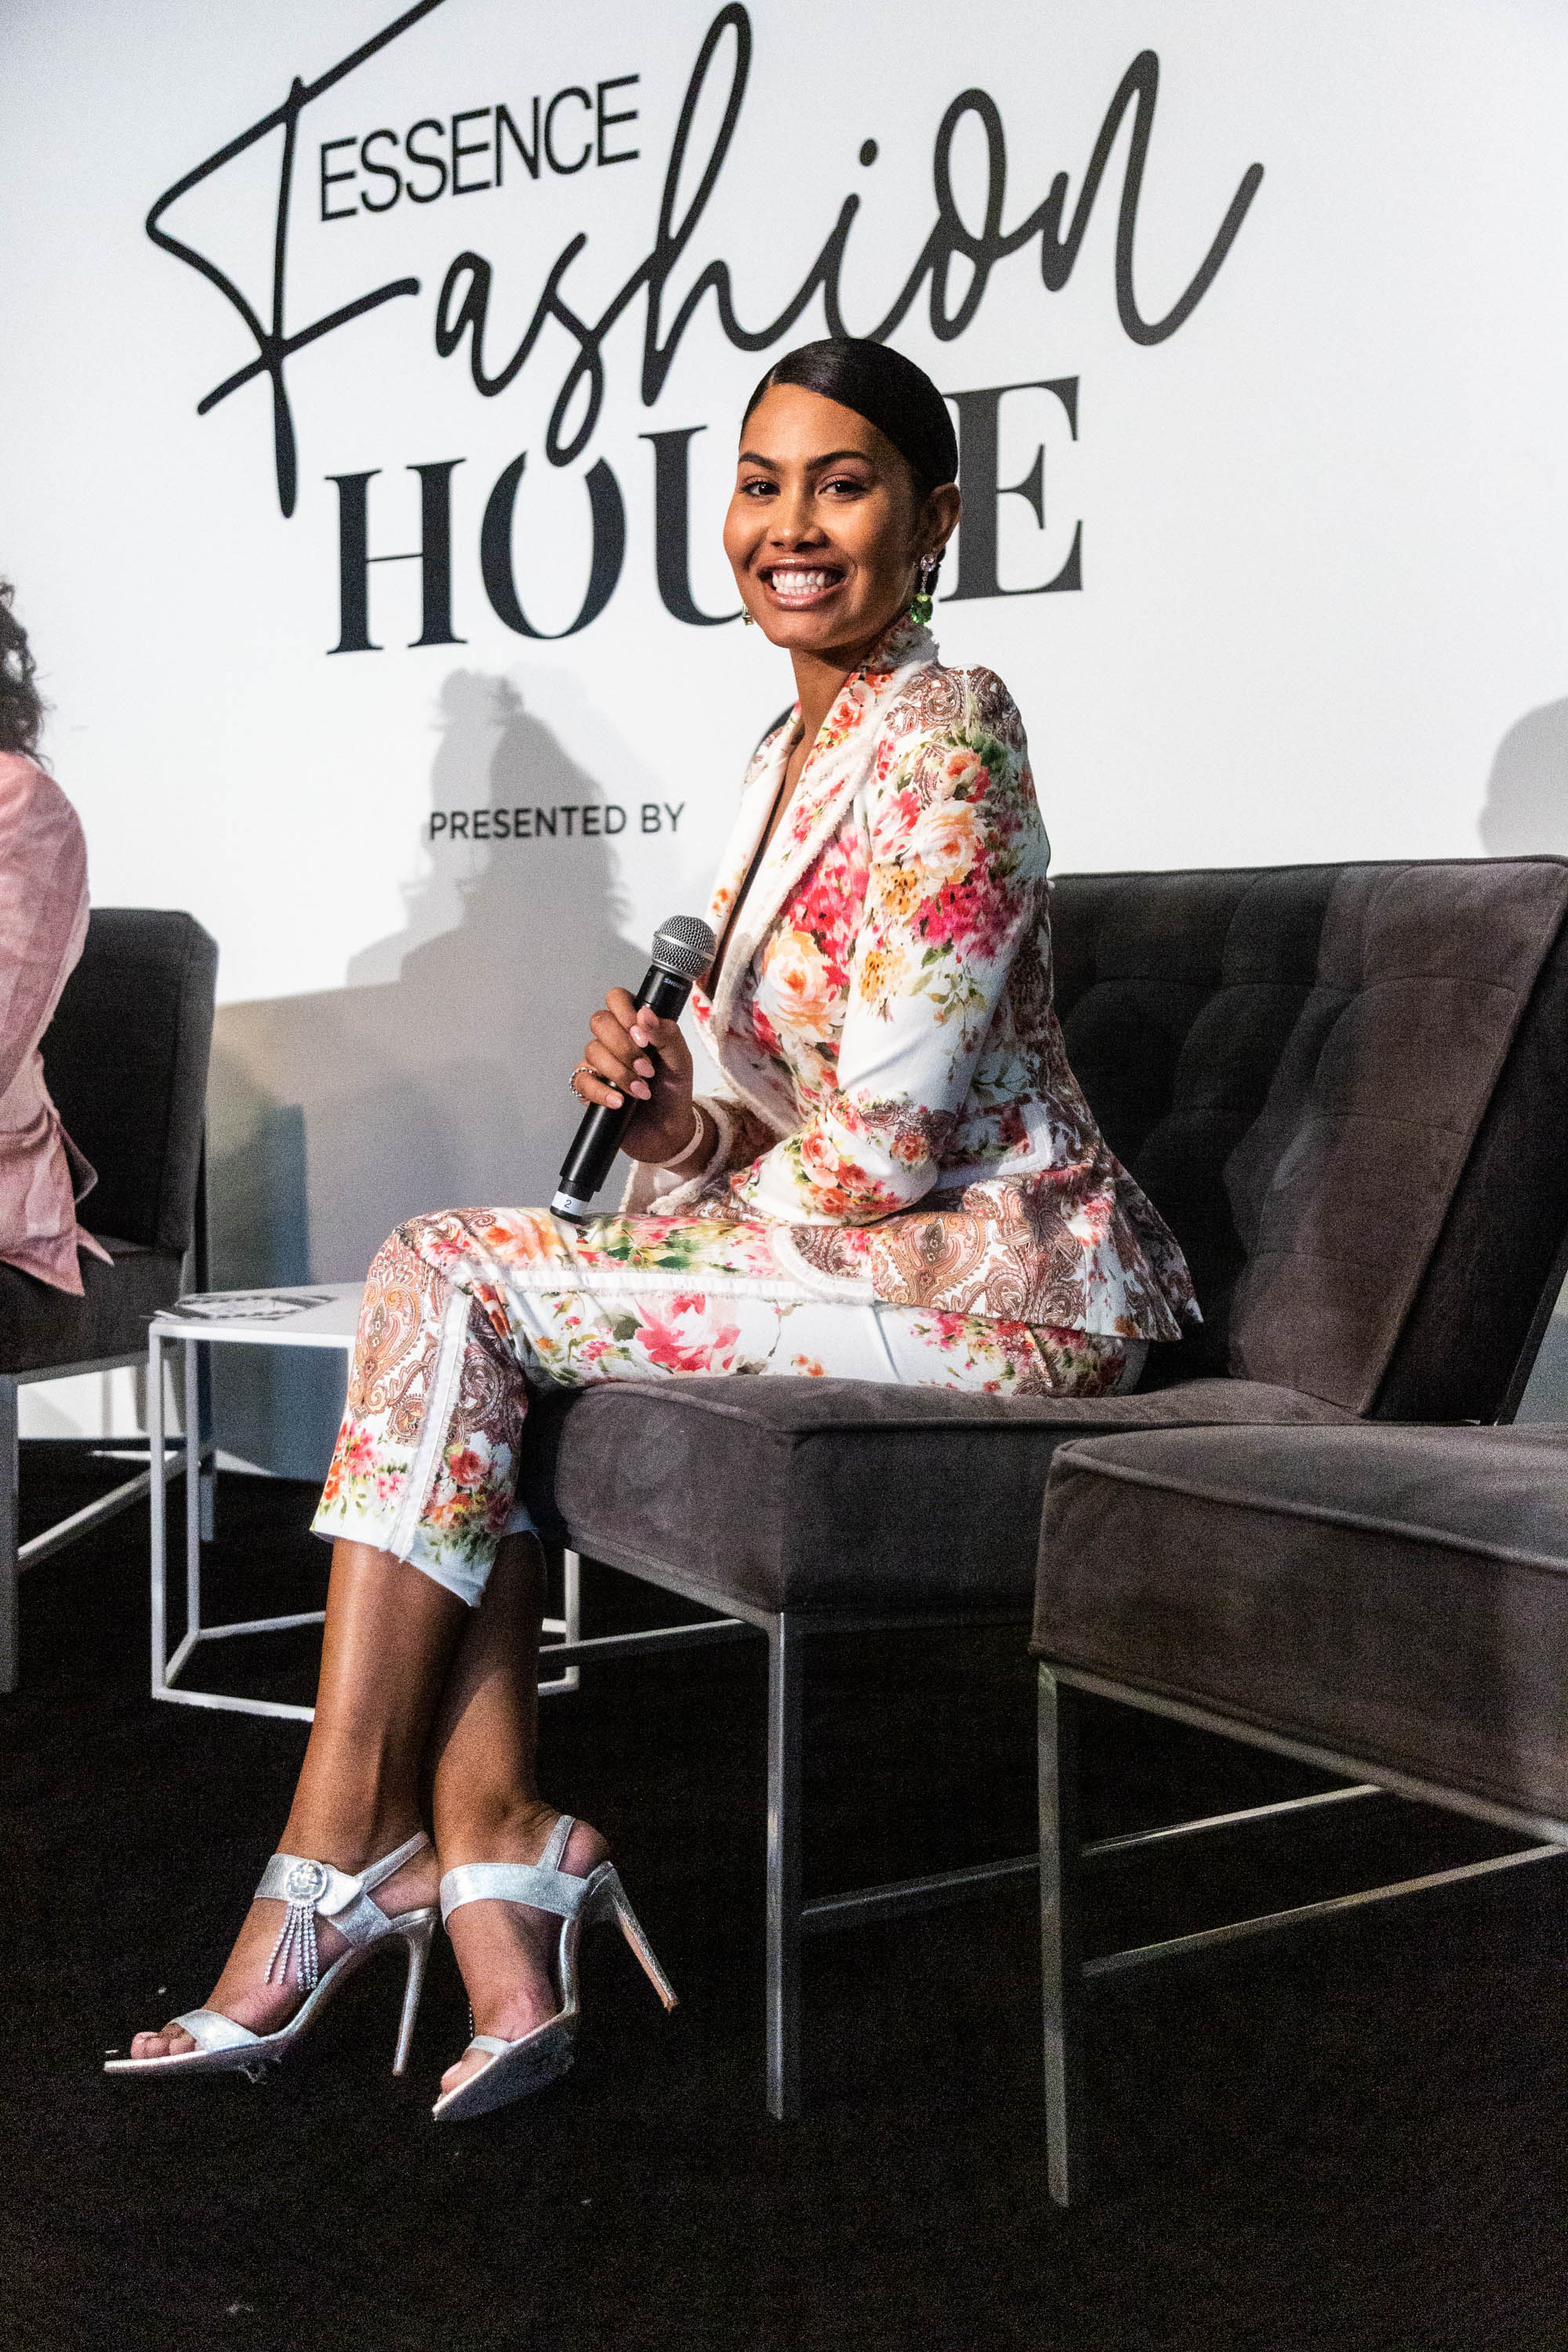 ESSENCE Fashion House NYC: Models Leyna Bloom & Liris Crosse Talk Redefining Beauty Standards In Fashion